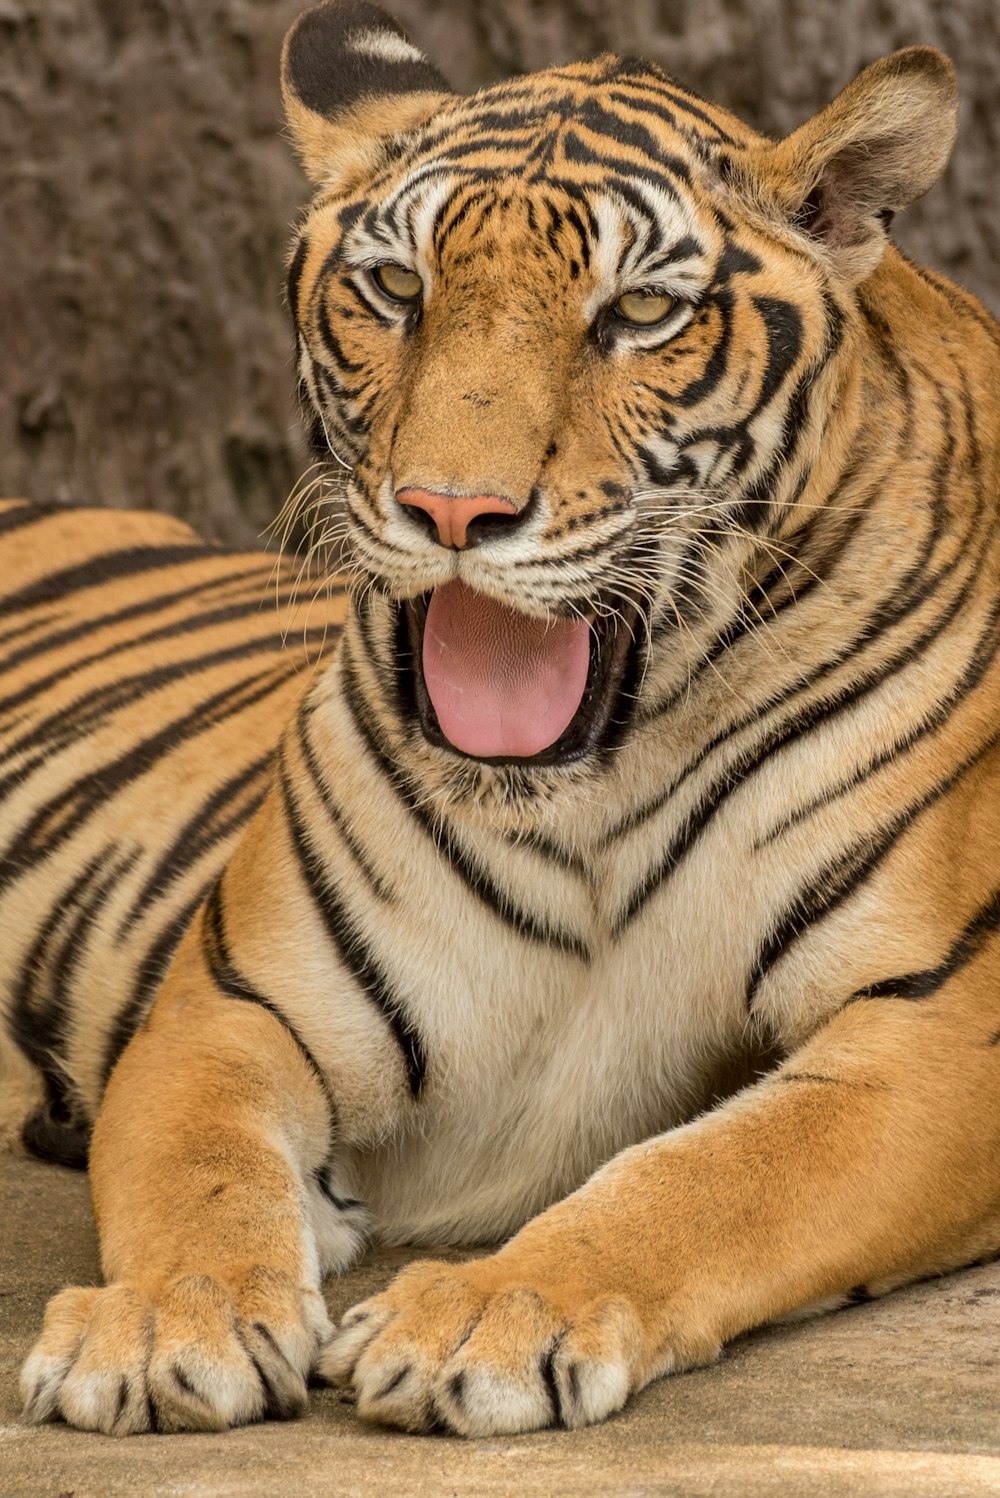 Tiger mit offenem Maul